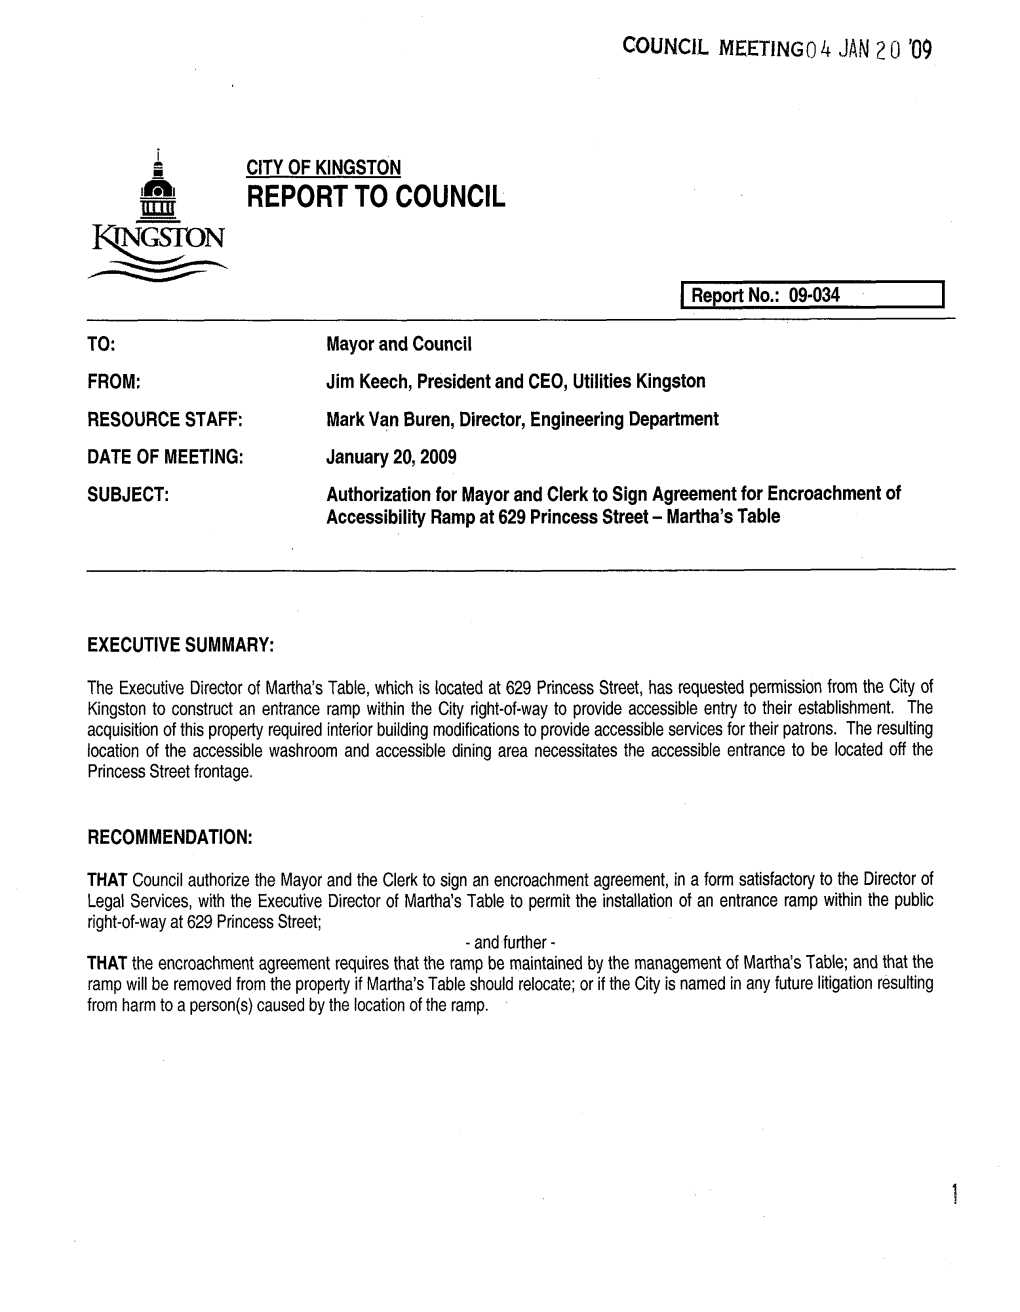 City of Kingston Council Agenda